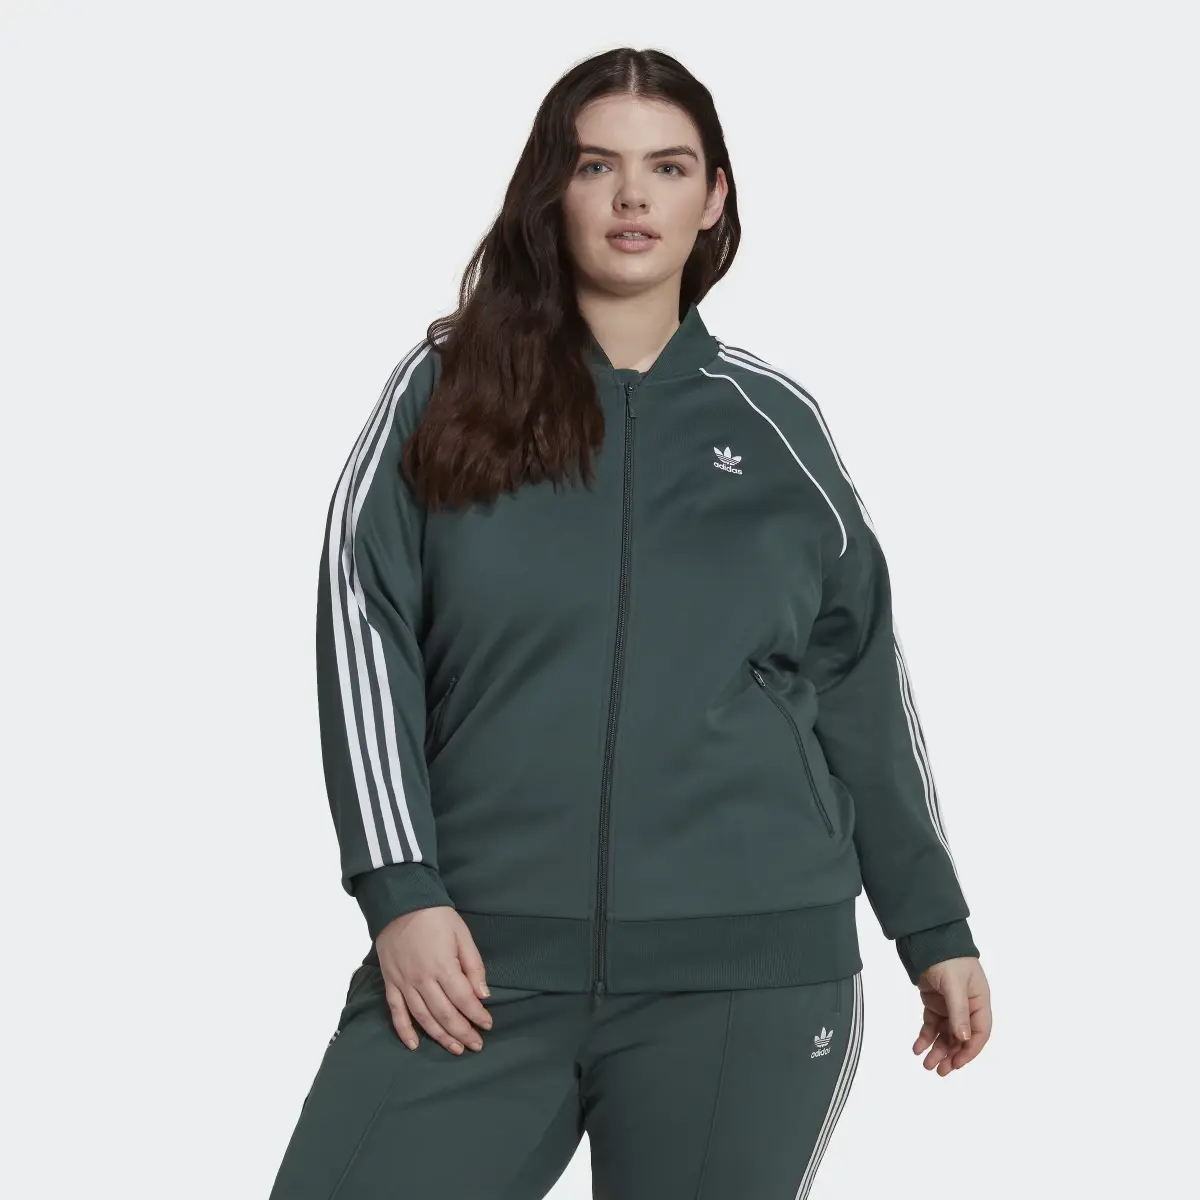 Adidas Primeblue SST Originals Jacke – Große Größen. 2